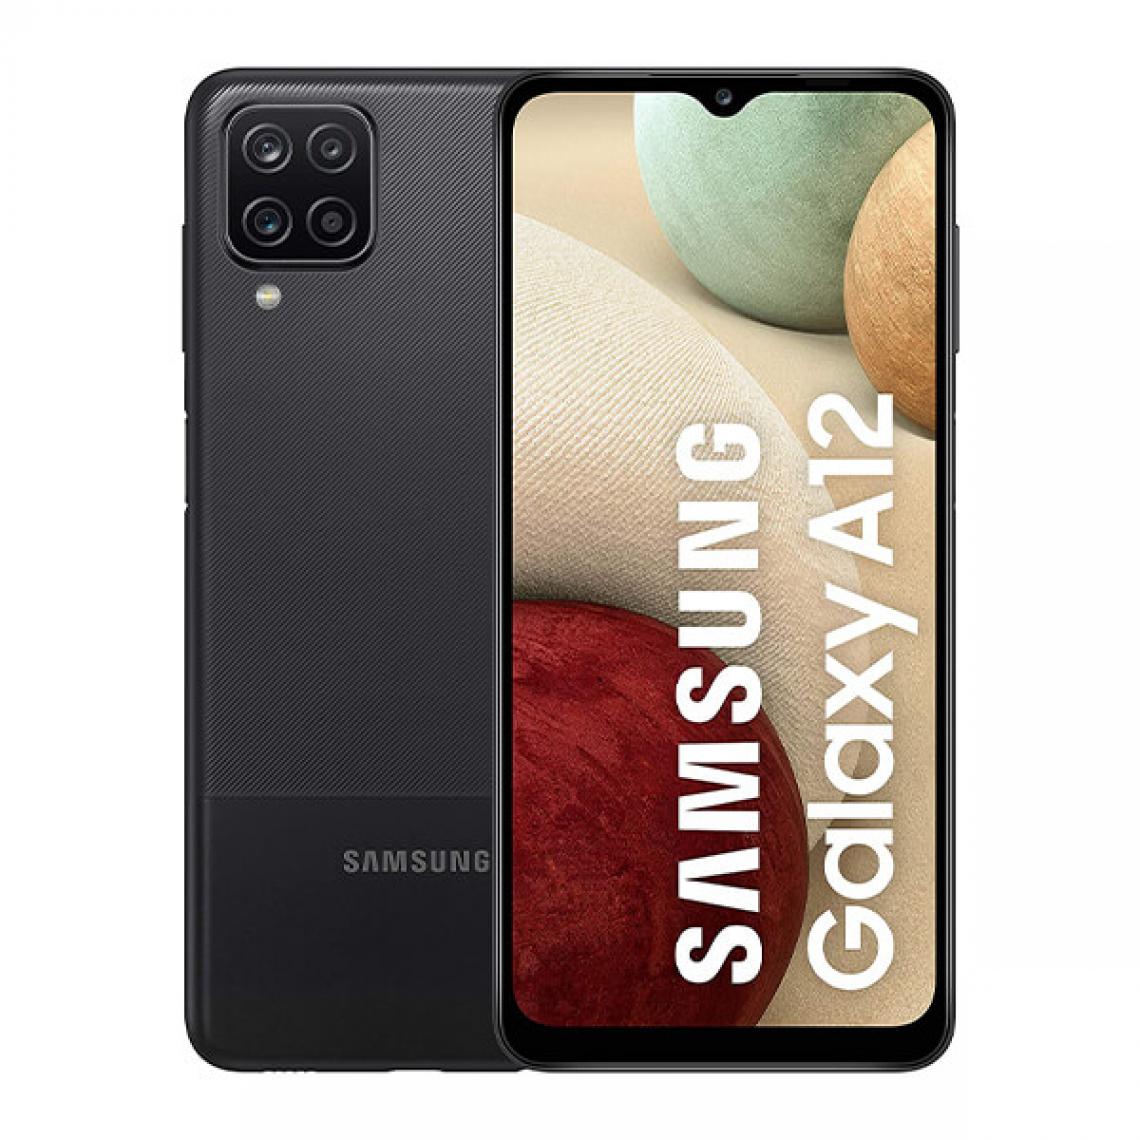 Samsung - Samsung Galaxy A12 4Go/64Go Noir (Black) Dual SIM A125F - Smartphone Android